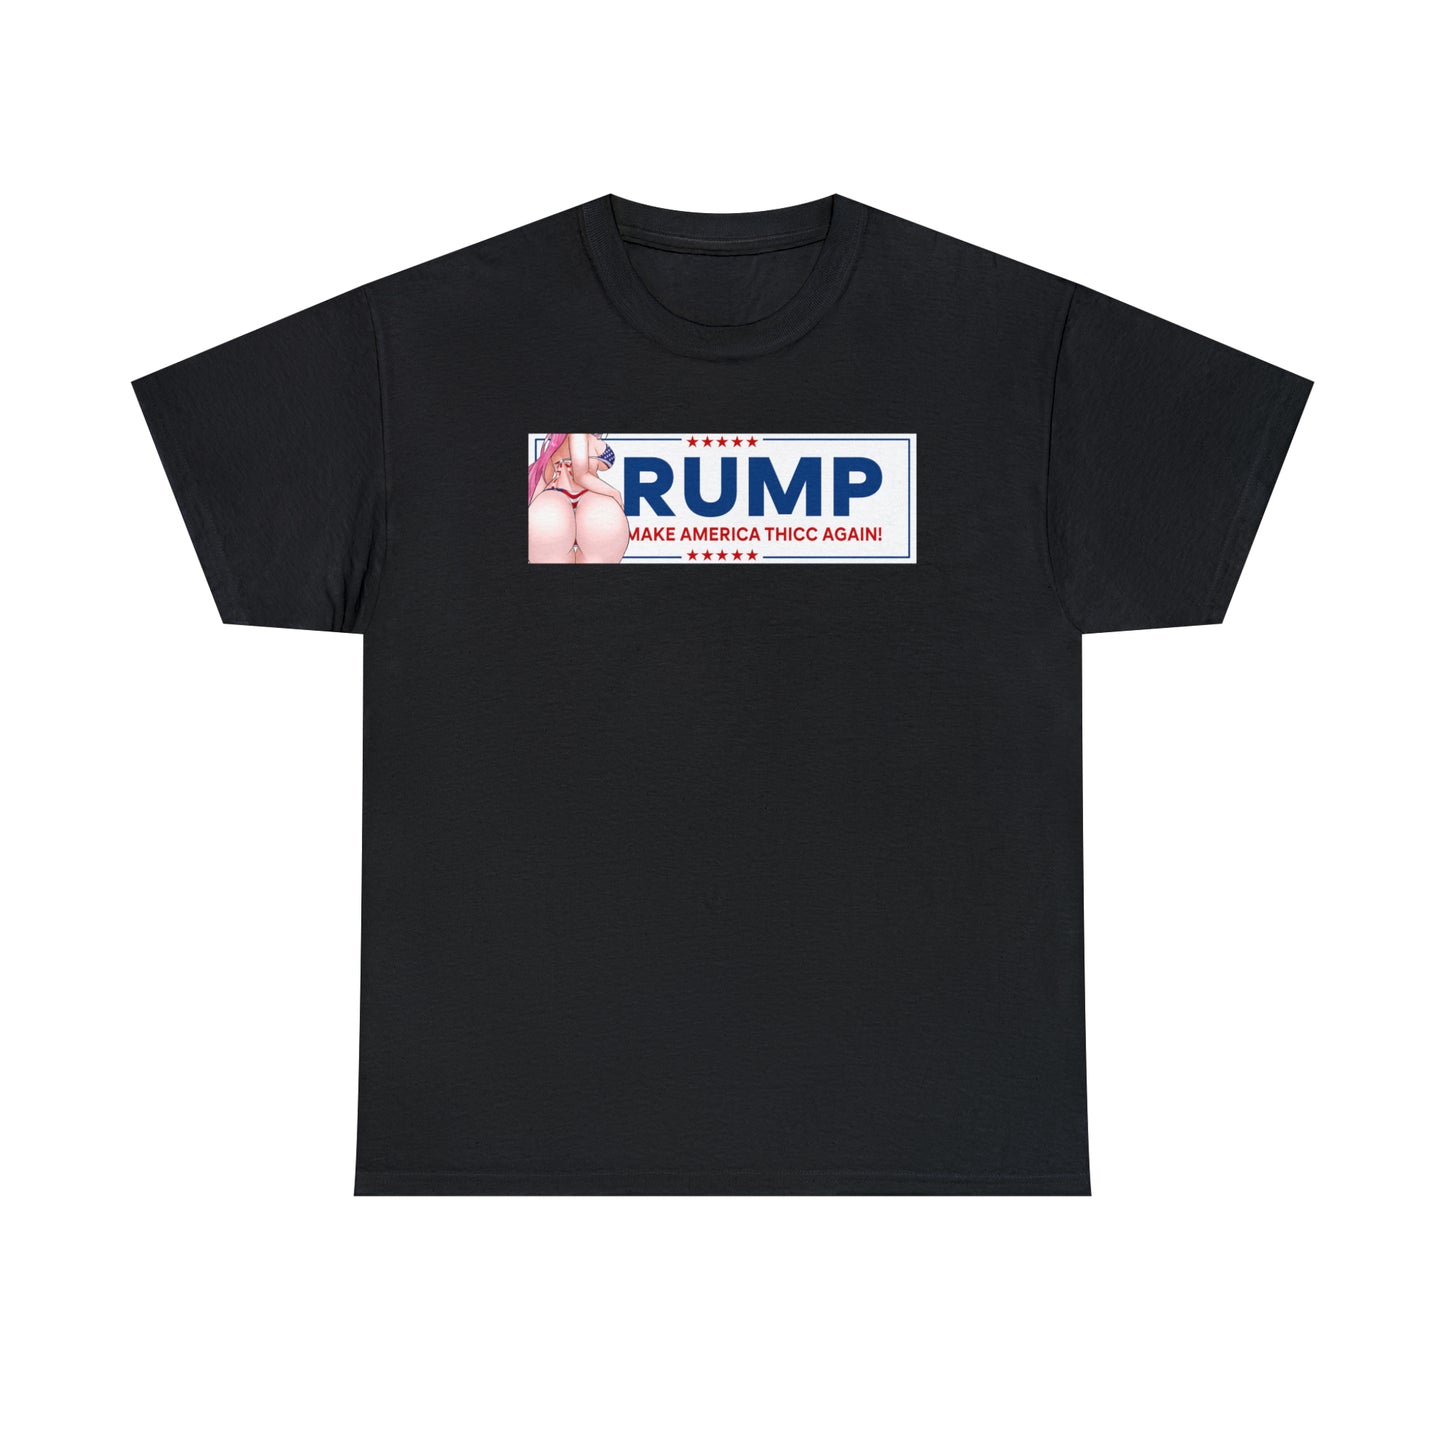 Rump T-Shirt